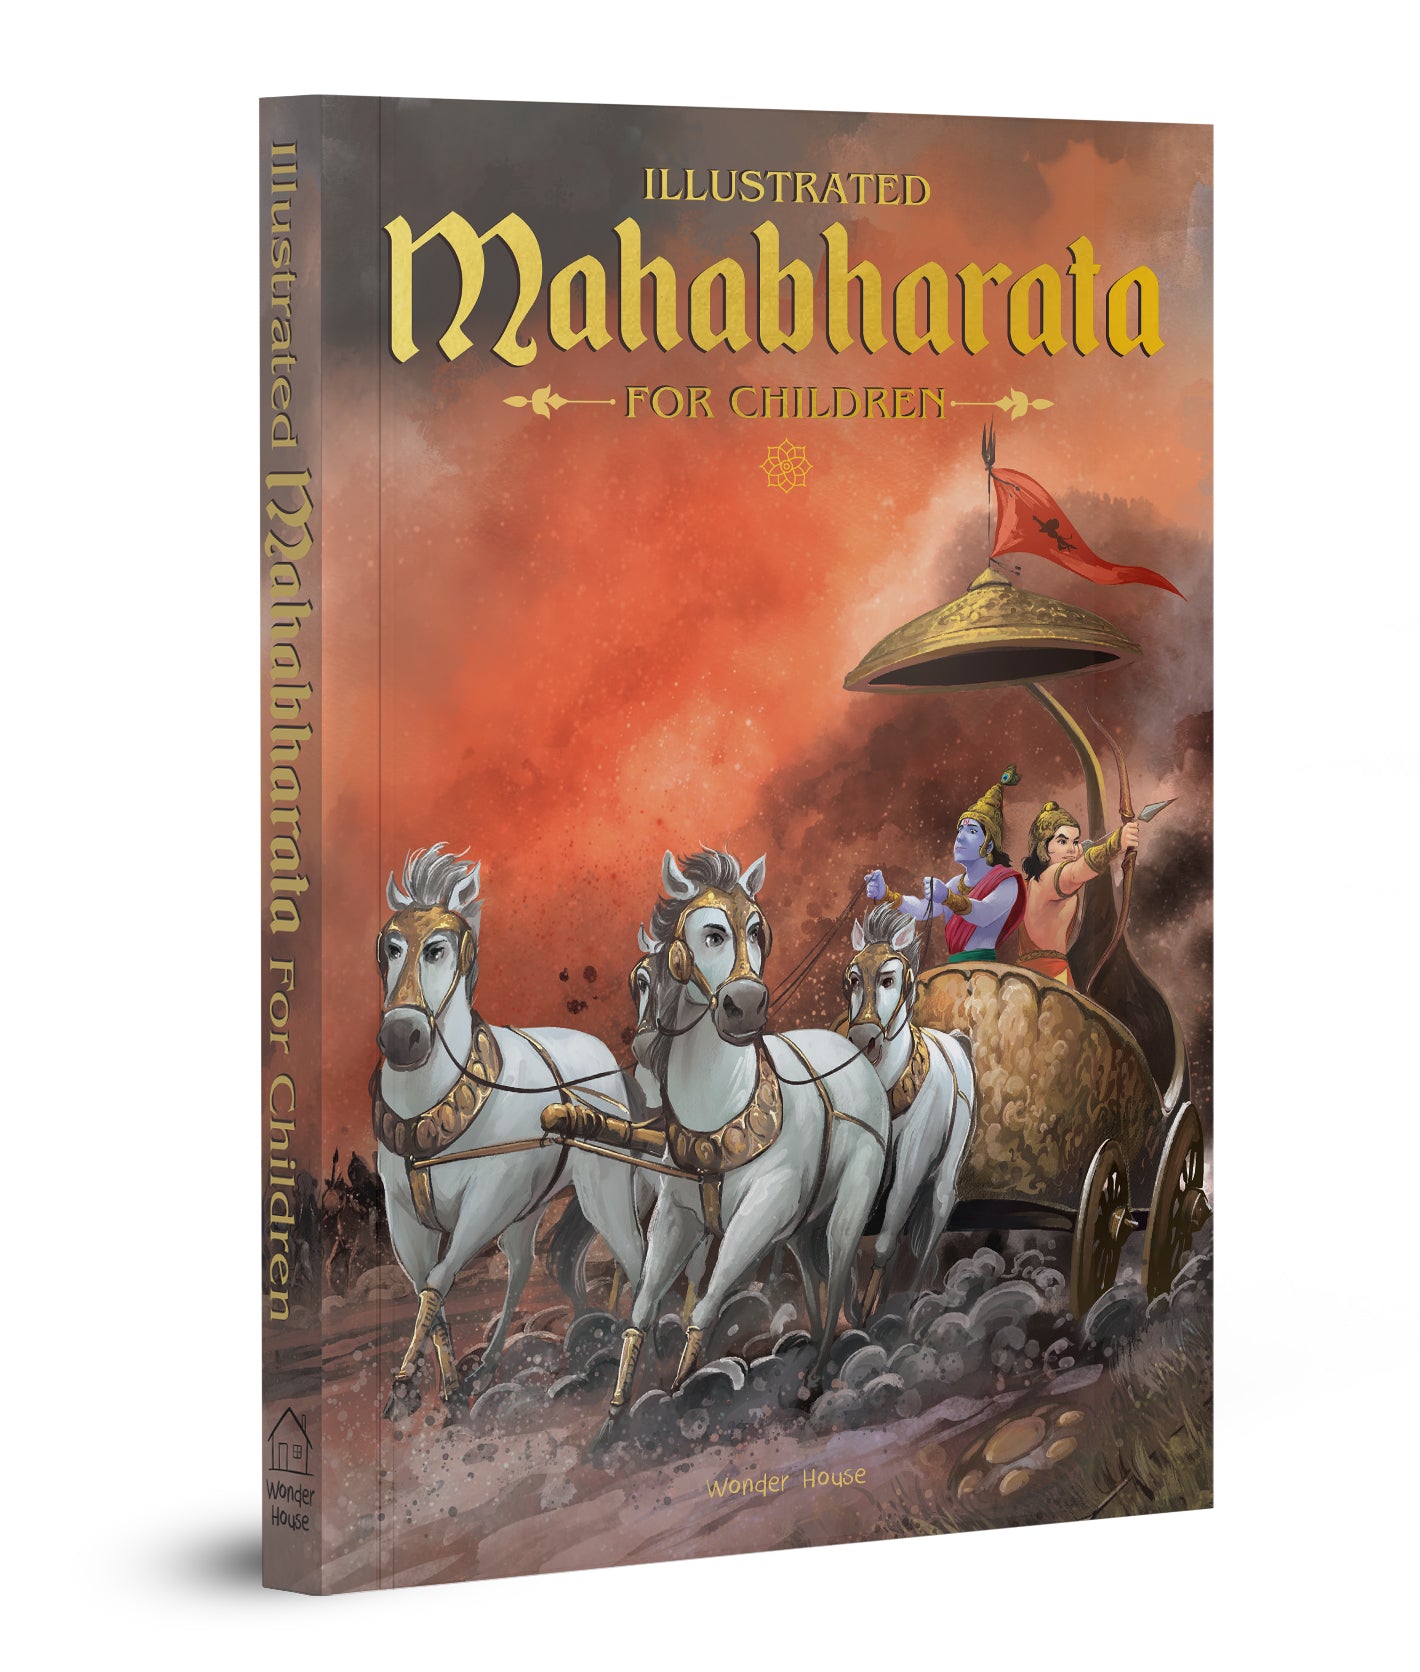 Mahabharata - Illustrated Book For Children (Paperback Edition)